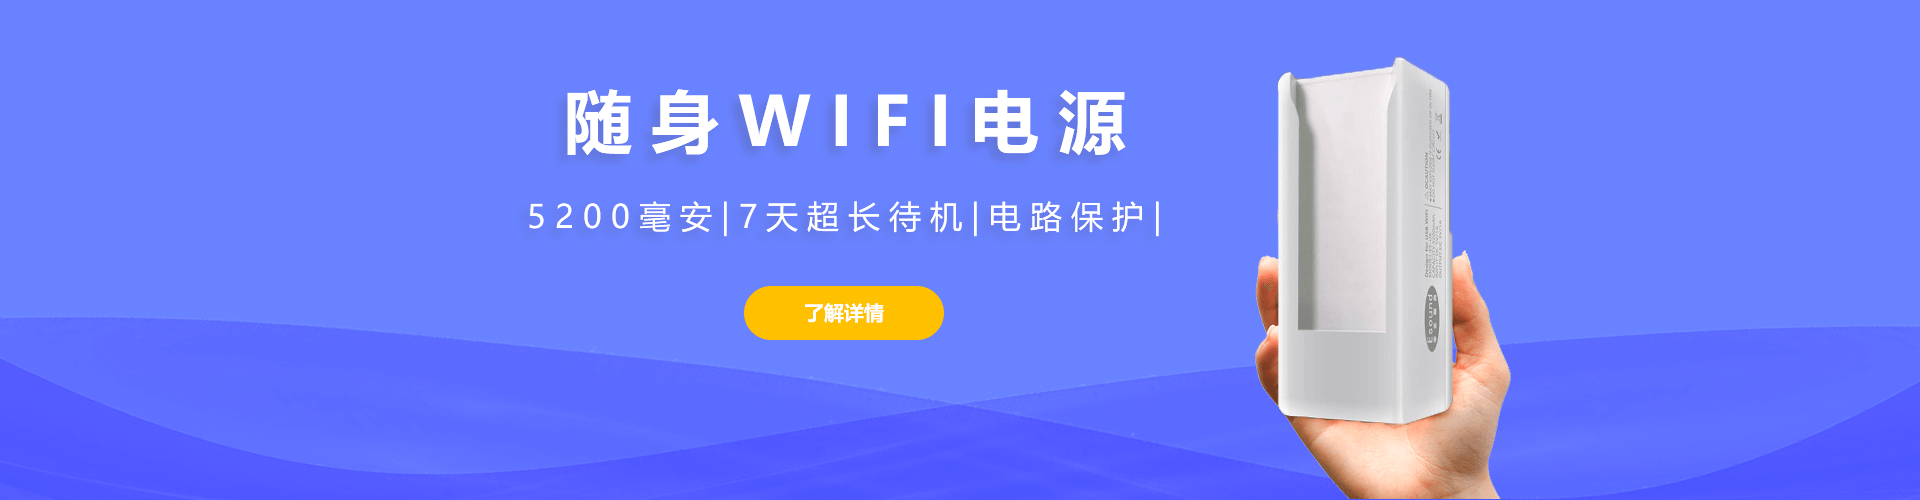 随身WiFi电源